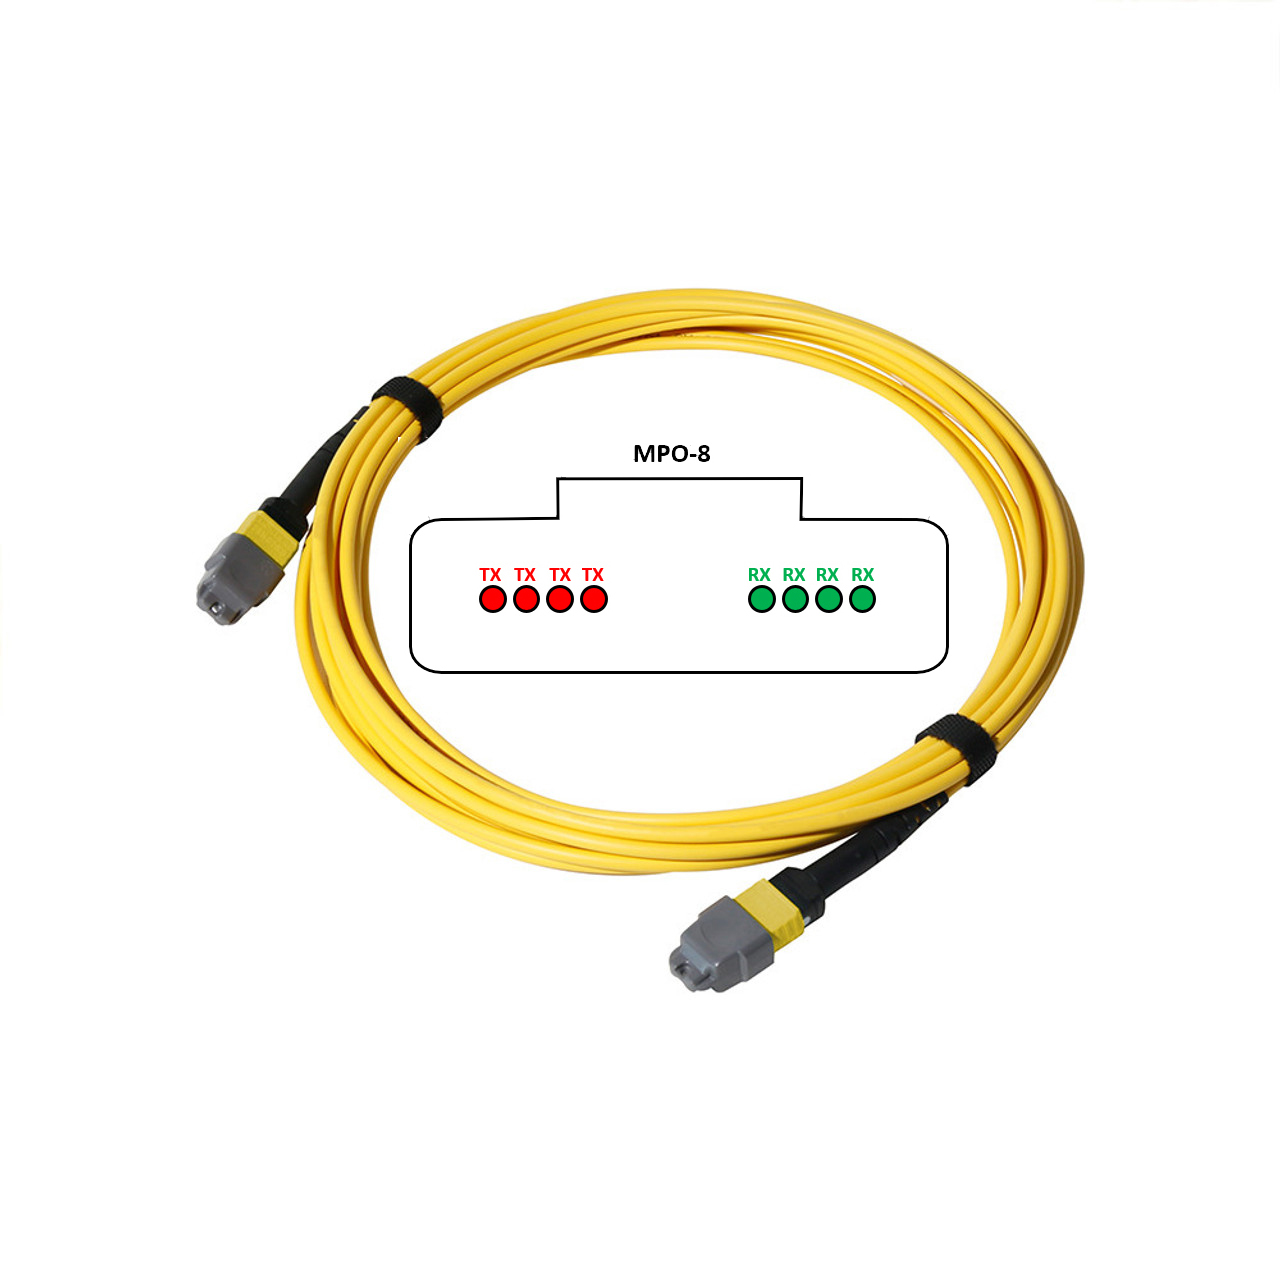 8-fiber MPO patch cable